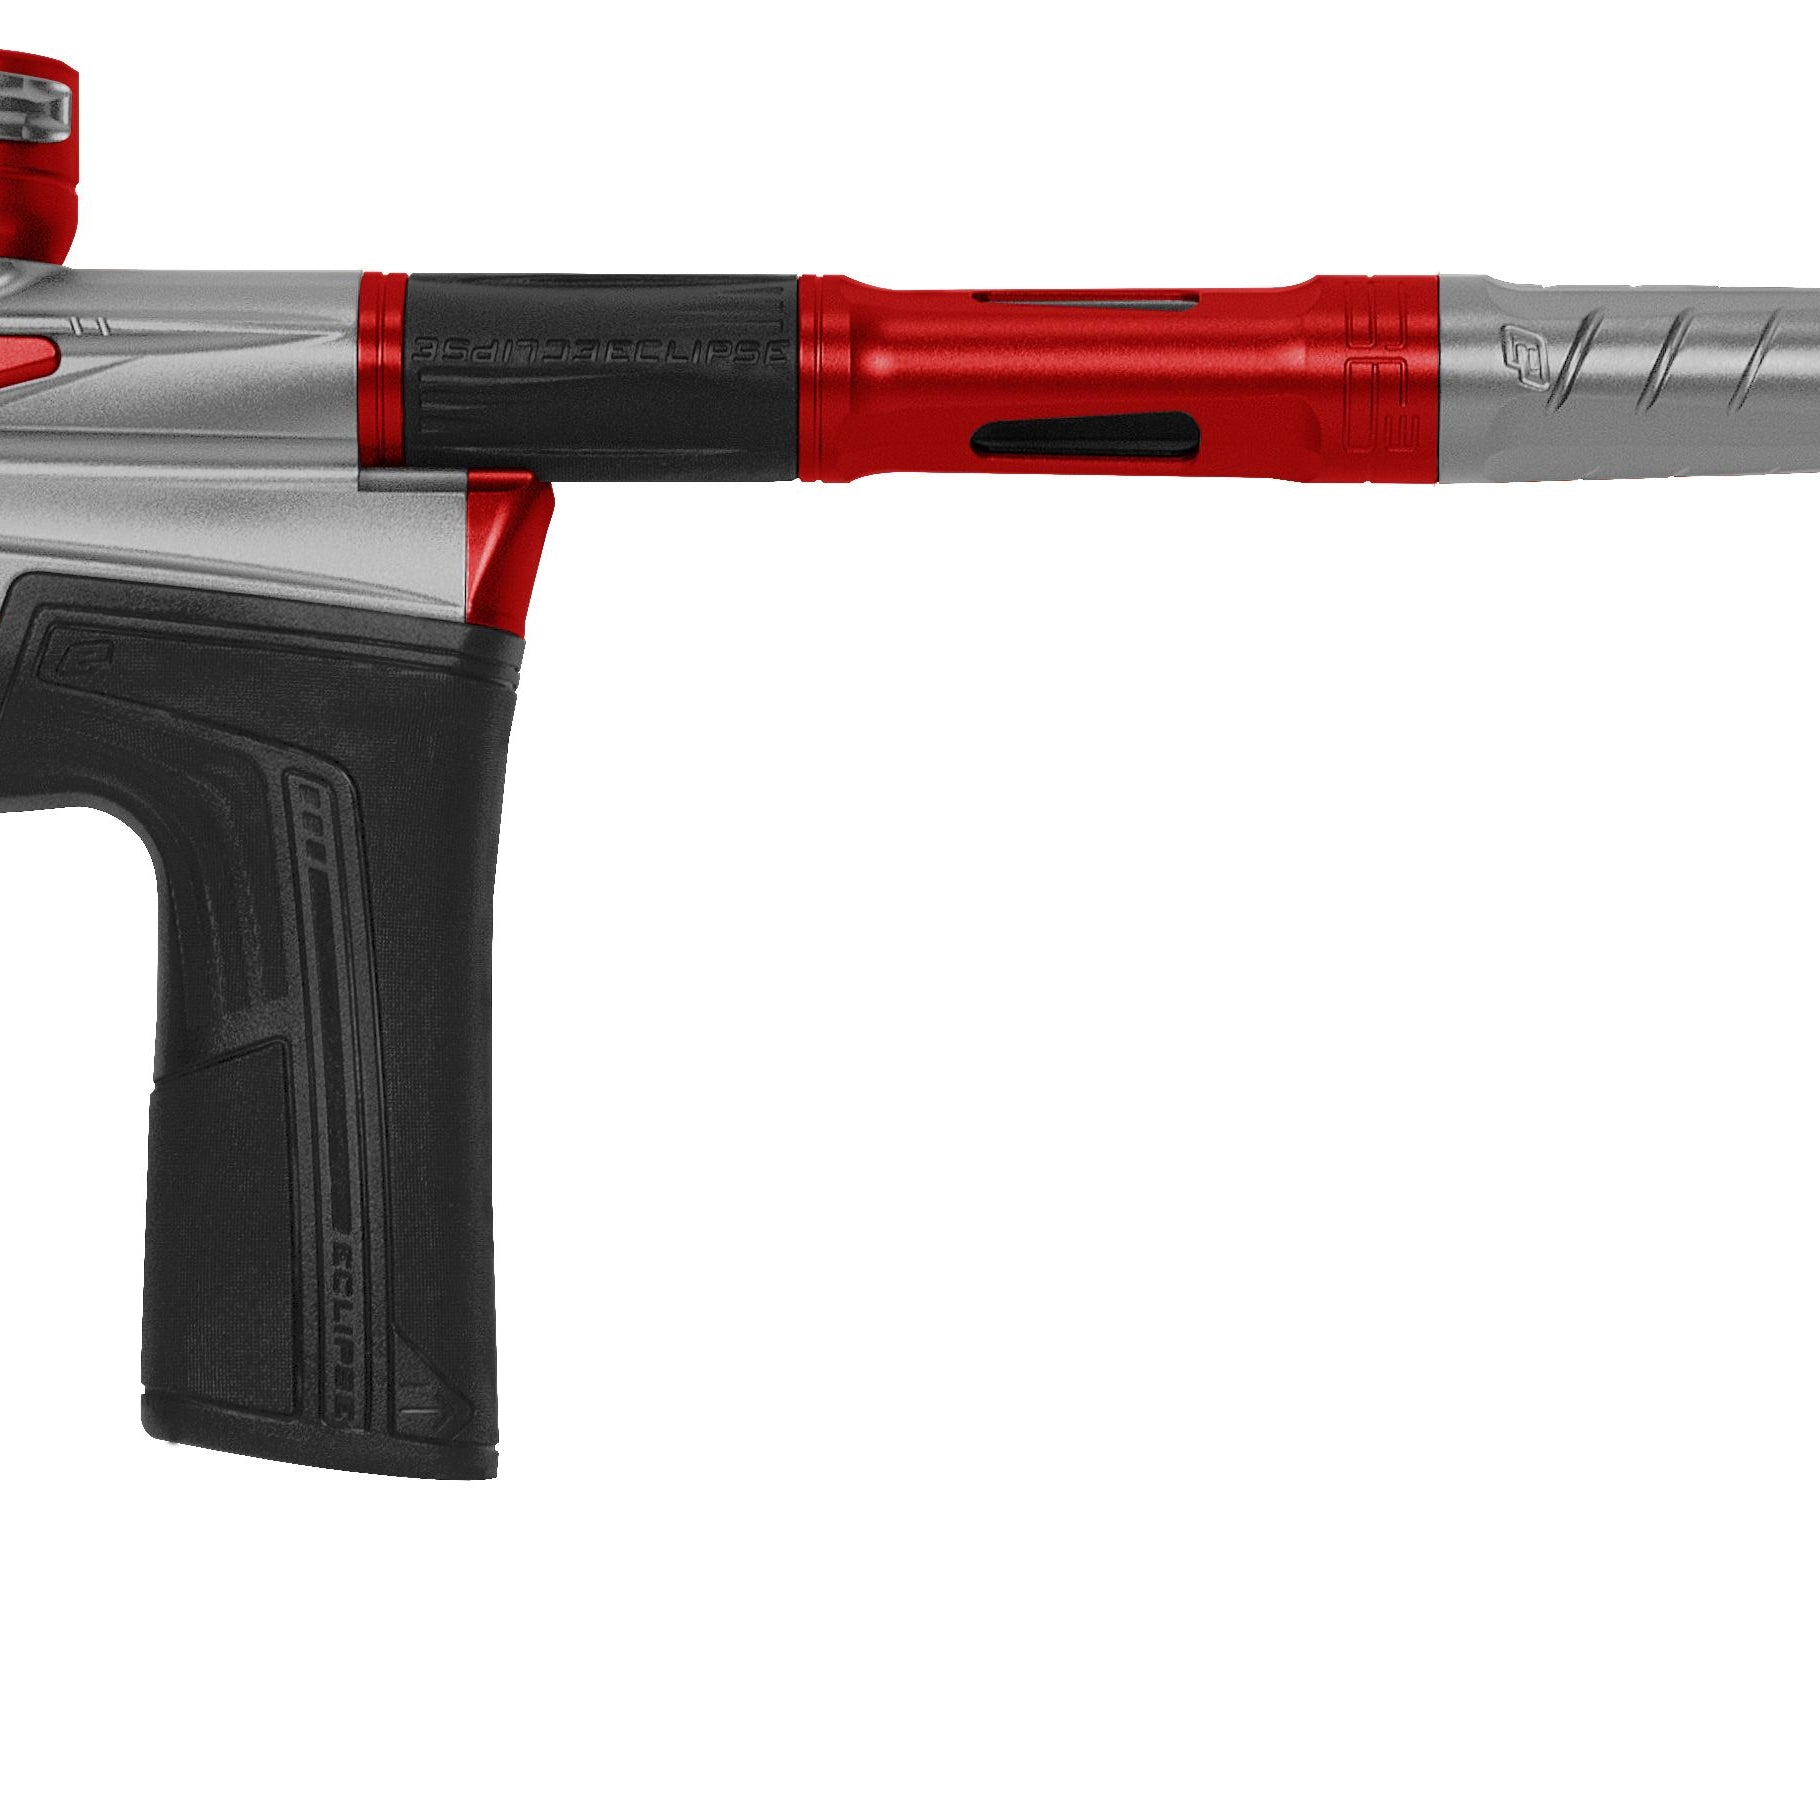 Planet Eclipse Ego LV2 Paintball Gun - Revolution (Light Grey/Red)